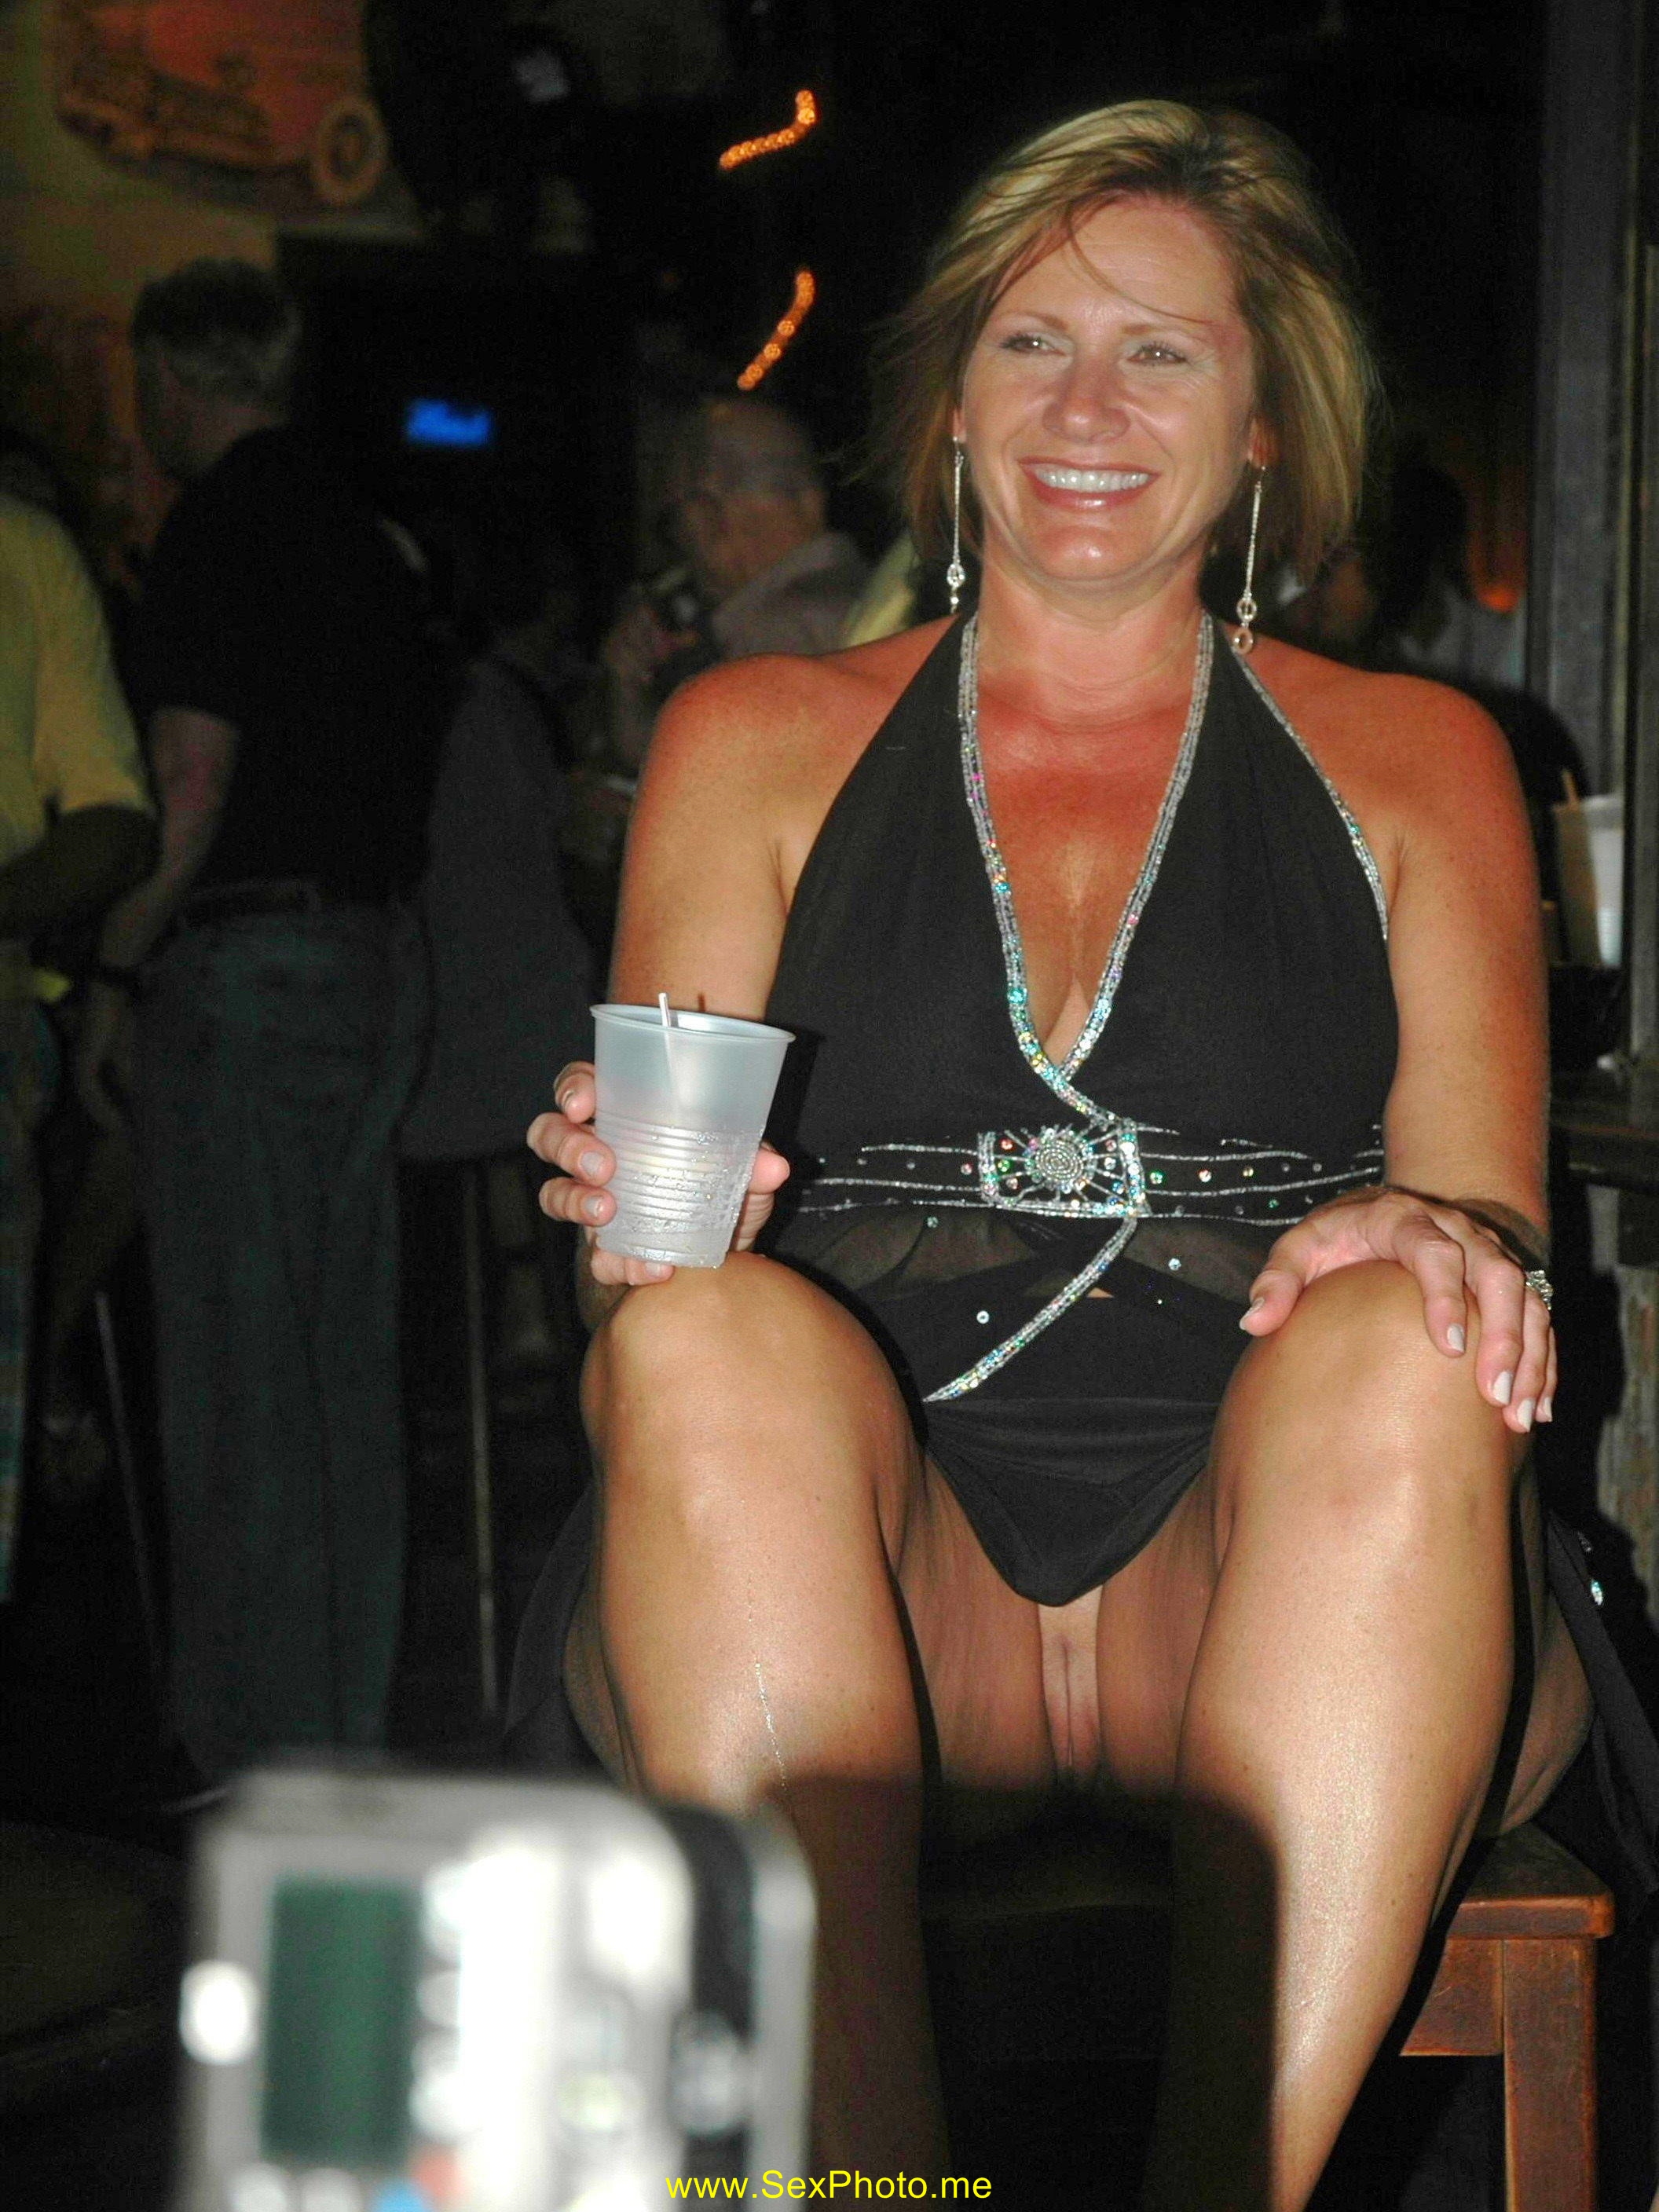 www.SexPhoto.me - Upskirt (82).jpg